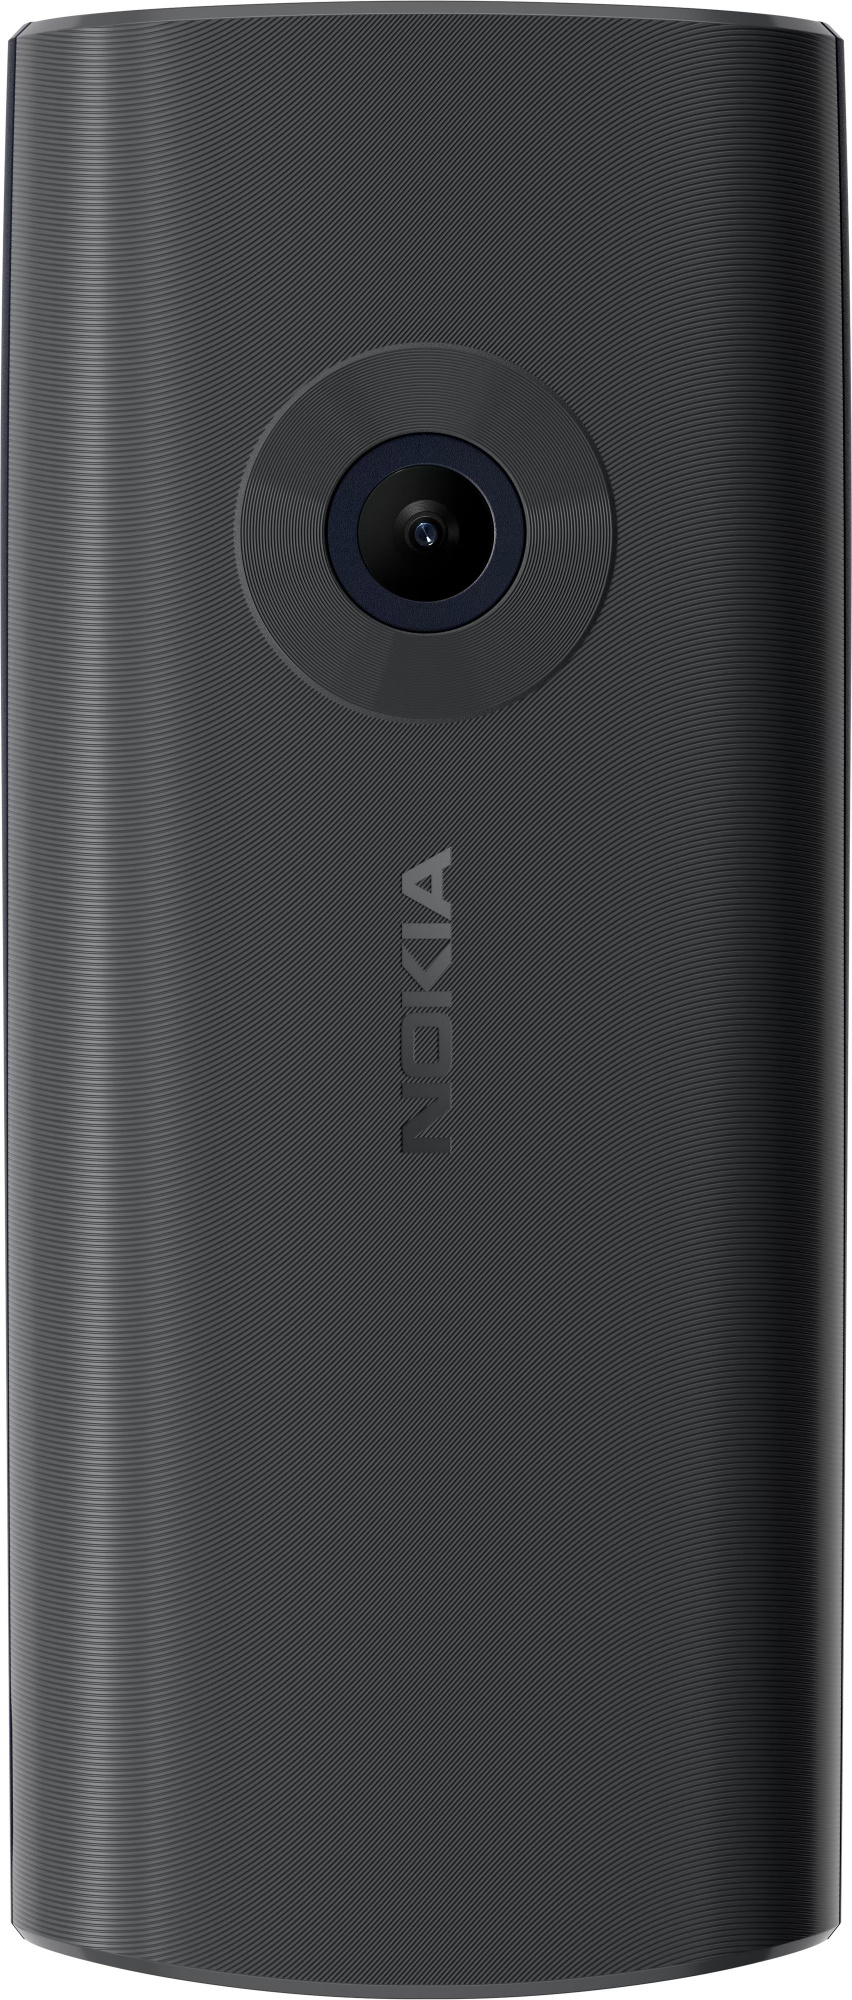 Мобильный телефон Nokia 110 (TA-1567) DS EAC 0.048 черный моноблок 2Sim 1.8" 240x320 Series 30+ 0.3Mpix GSM900/1800 Protect MP3 FM Micro SD max32Gb